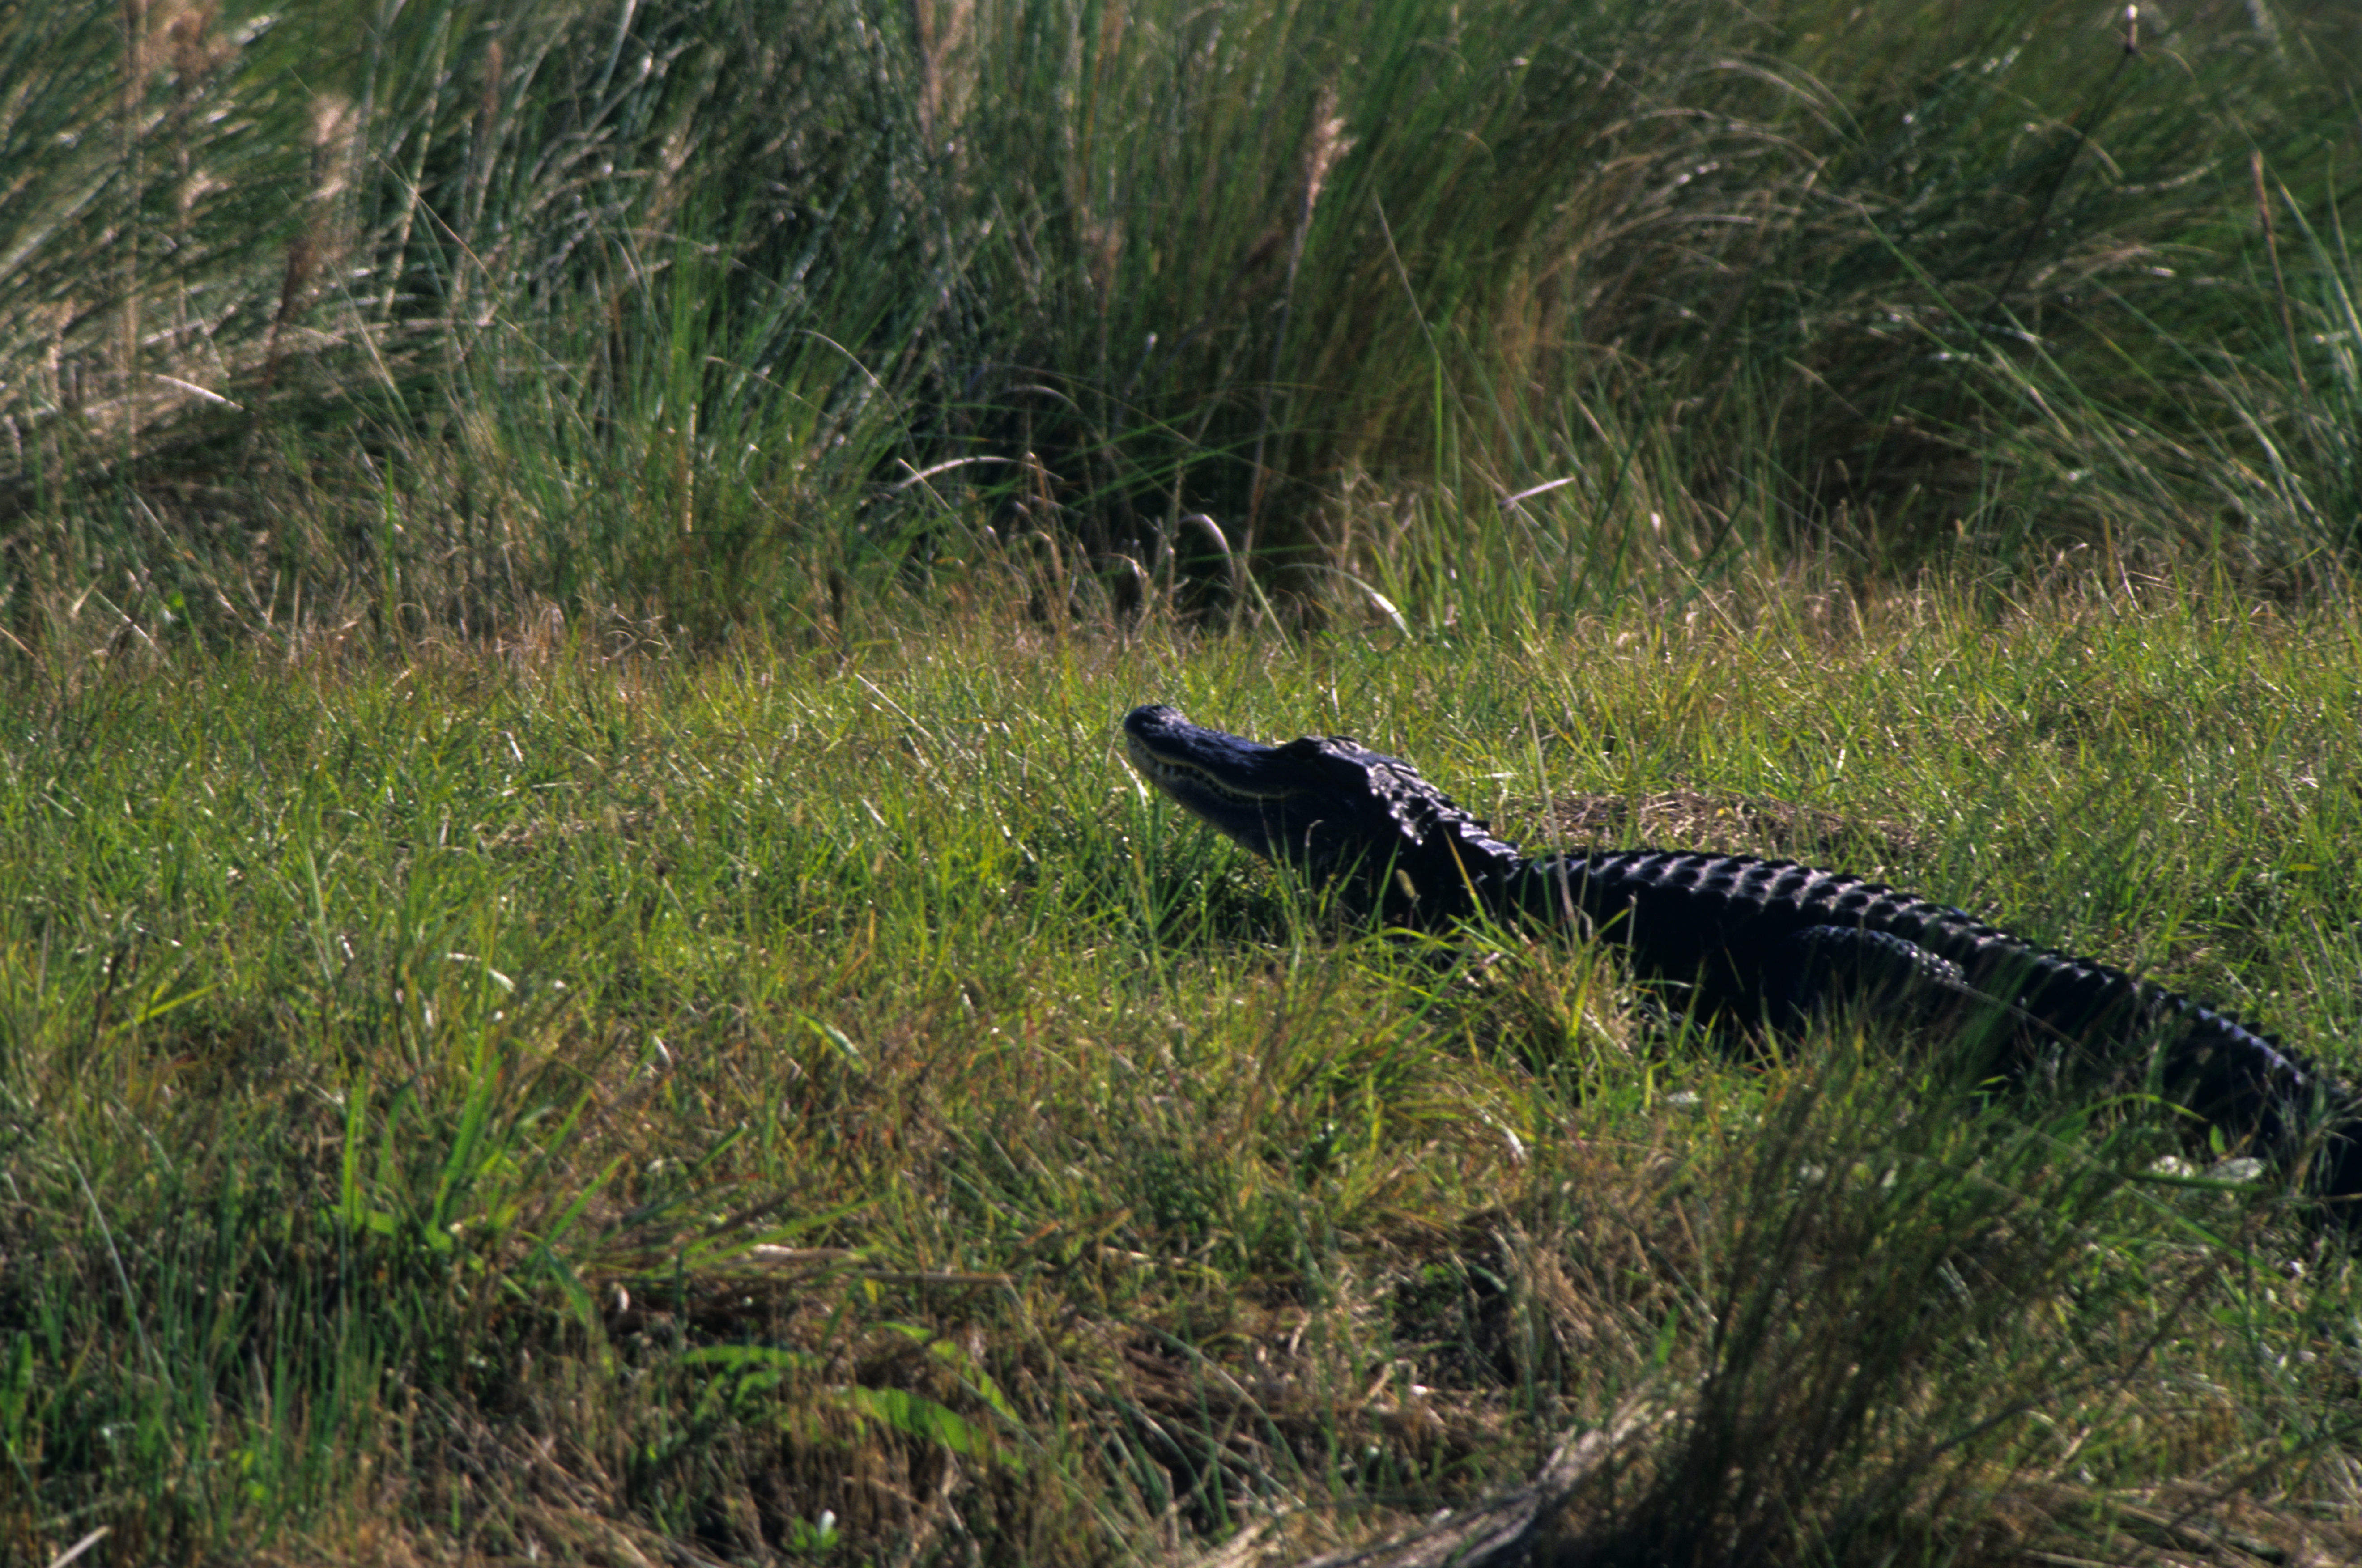 Image of American alligator